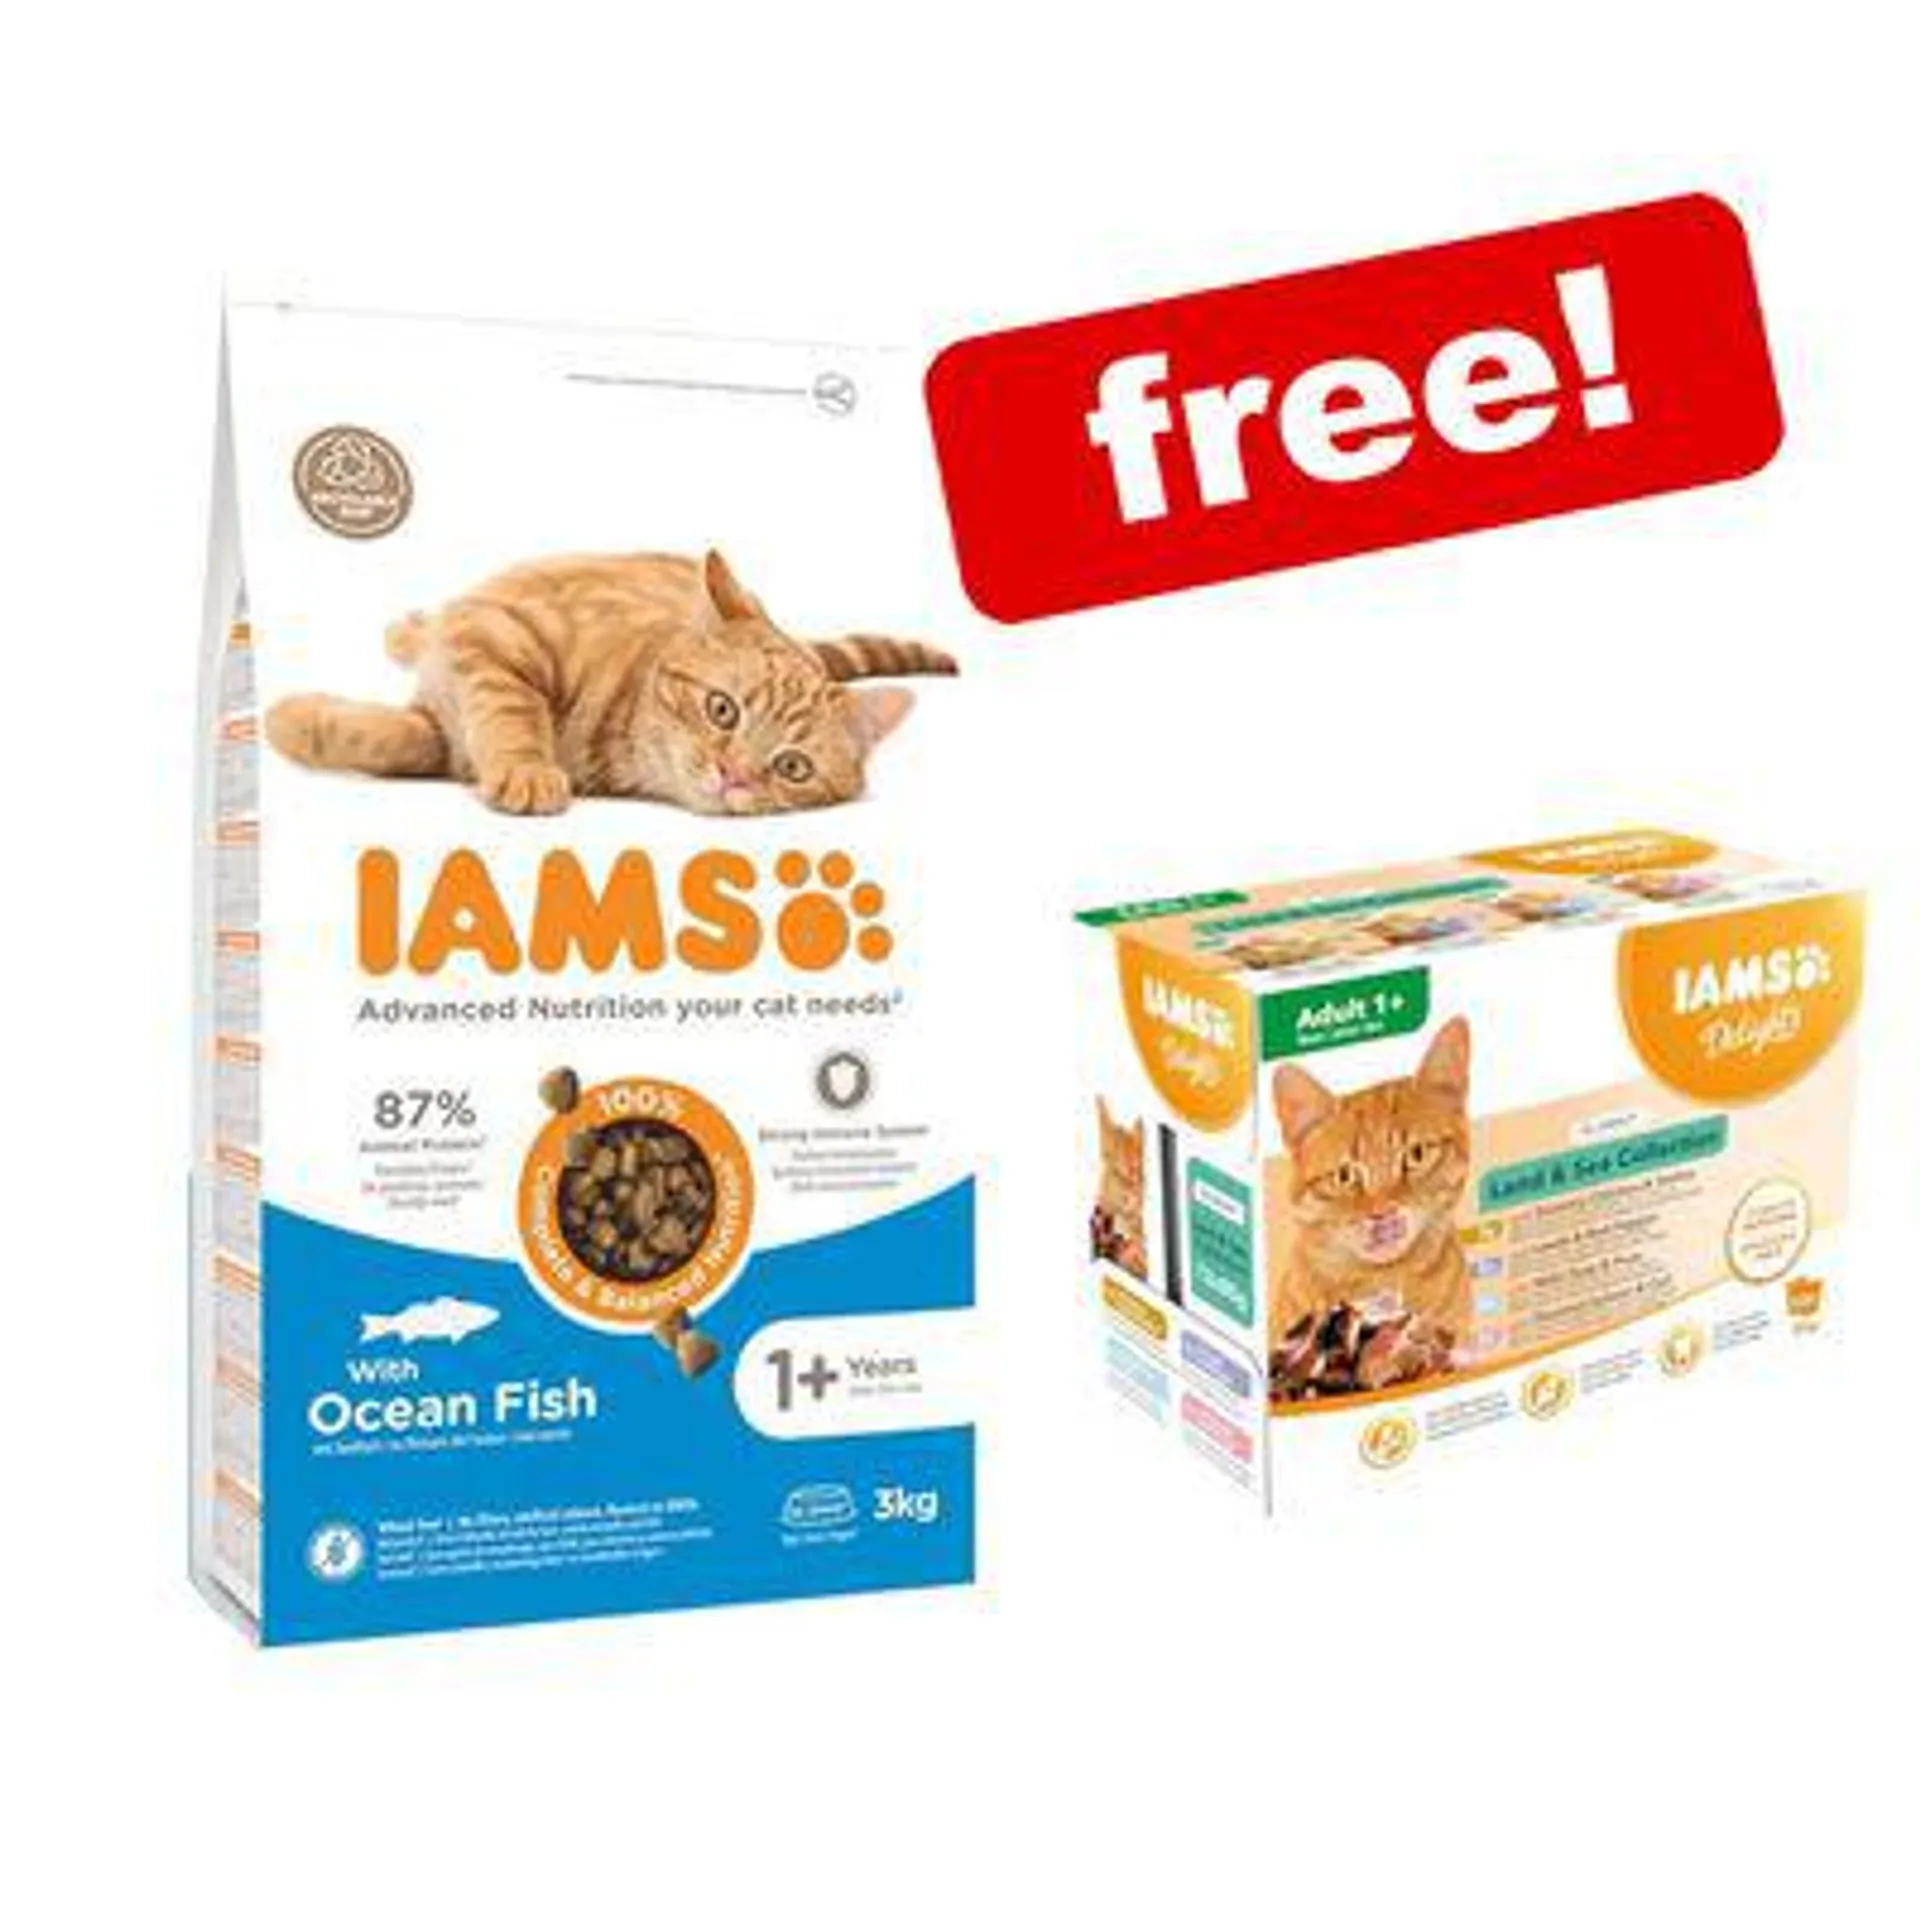 2 x 3kg IAMS Adult/Senior Dry Cat Food + 12 x 85g IAMS Wet Cat Food Free! *